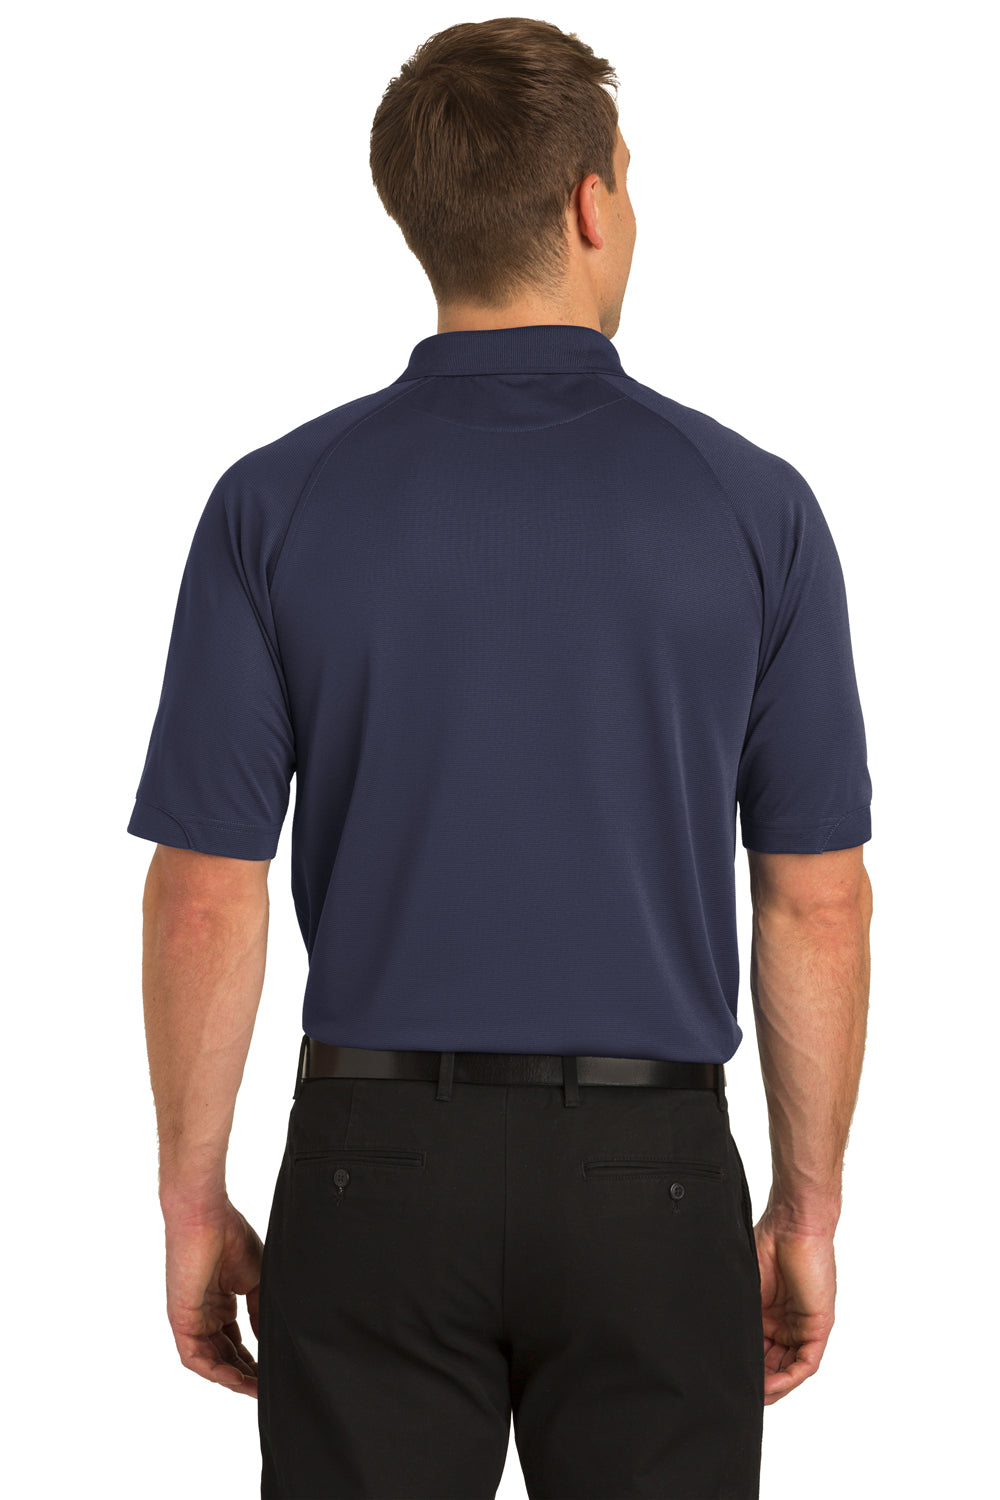 Port Authority K525 Mens Dry Zone Moisture Wicking Short Sleeve Polo Shirt Navy Blue Back